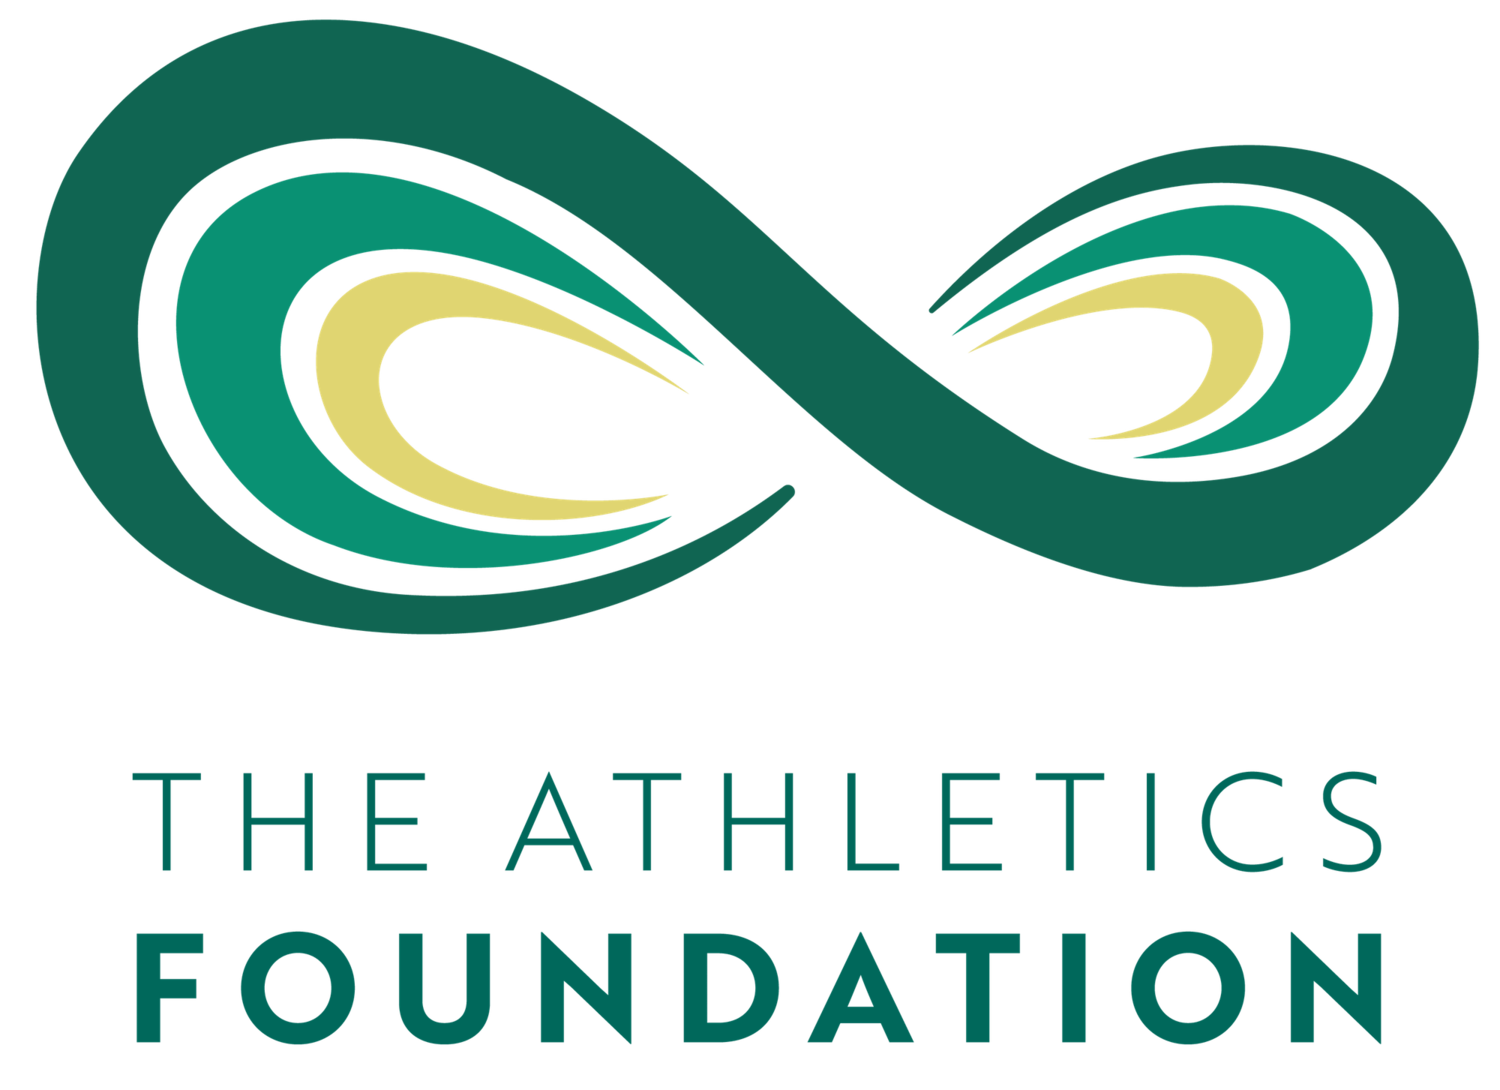 The Athletics Foundation